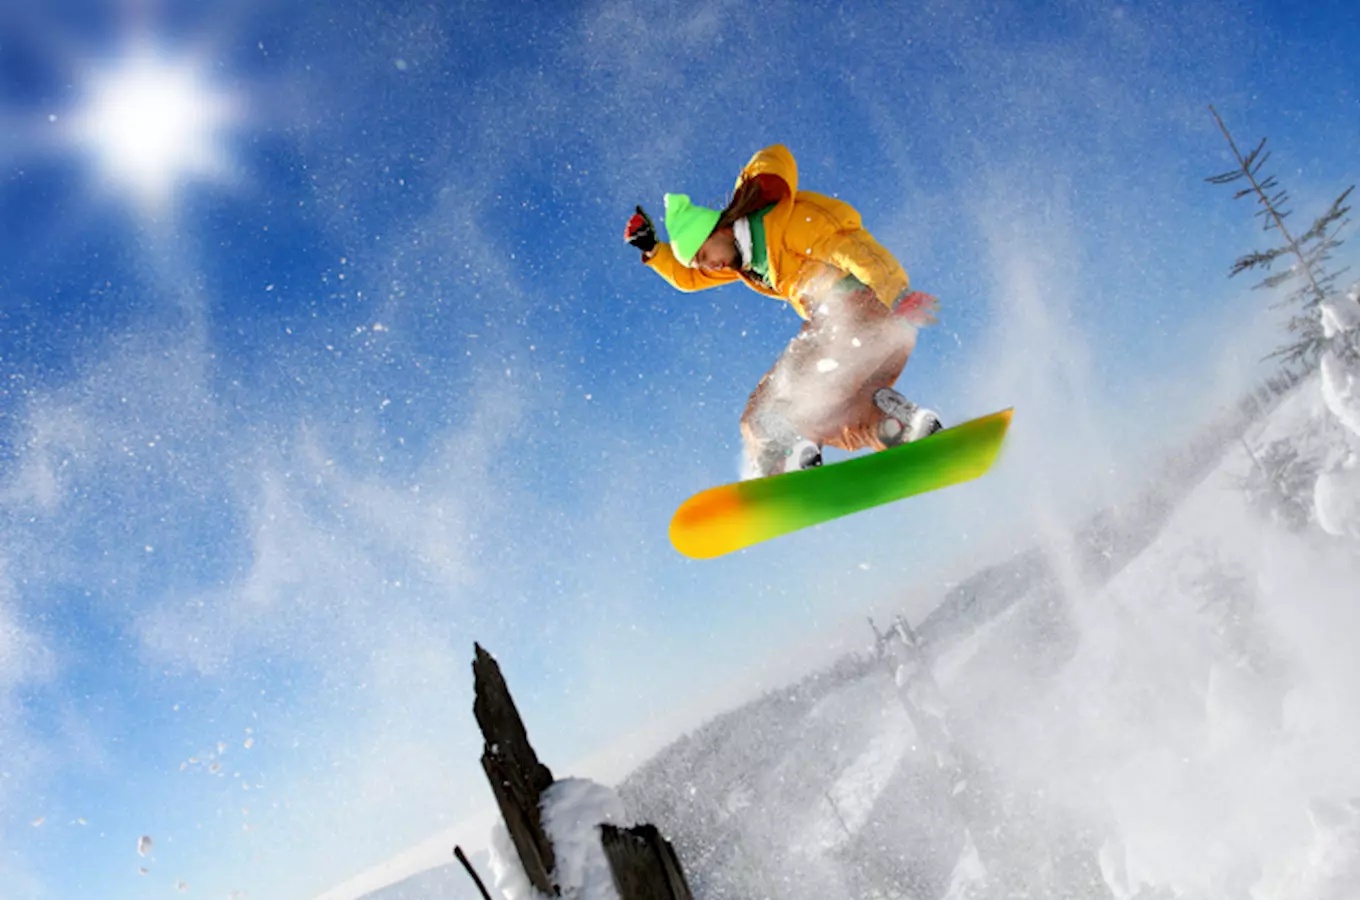 Snowhill zve na jarní prázdniny do svých zasnežených skiareálu